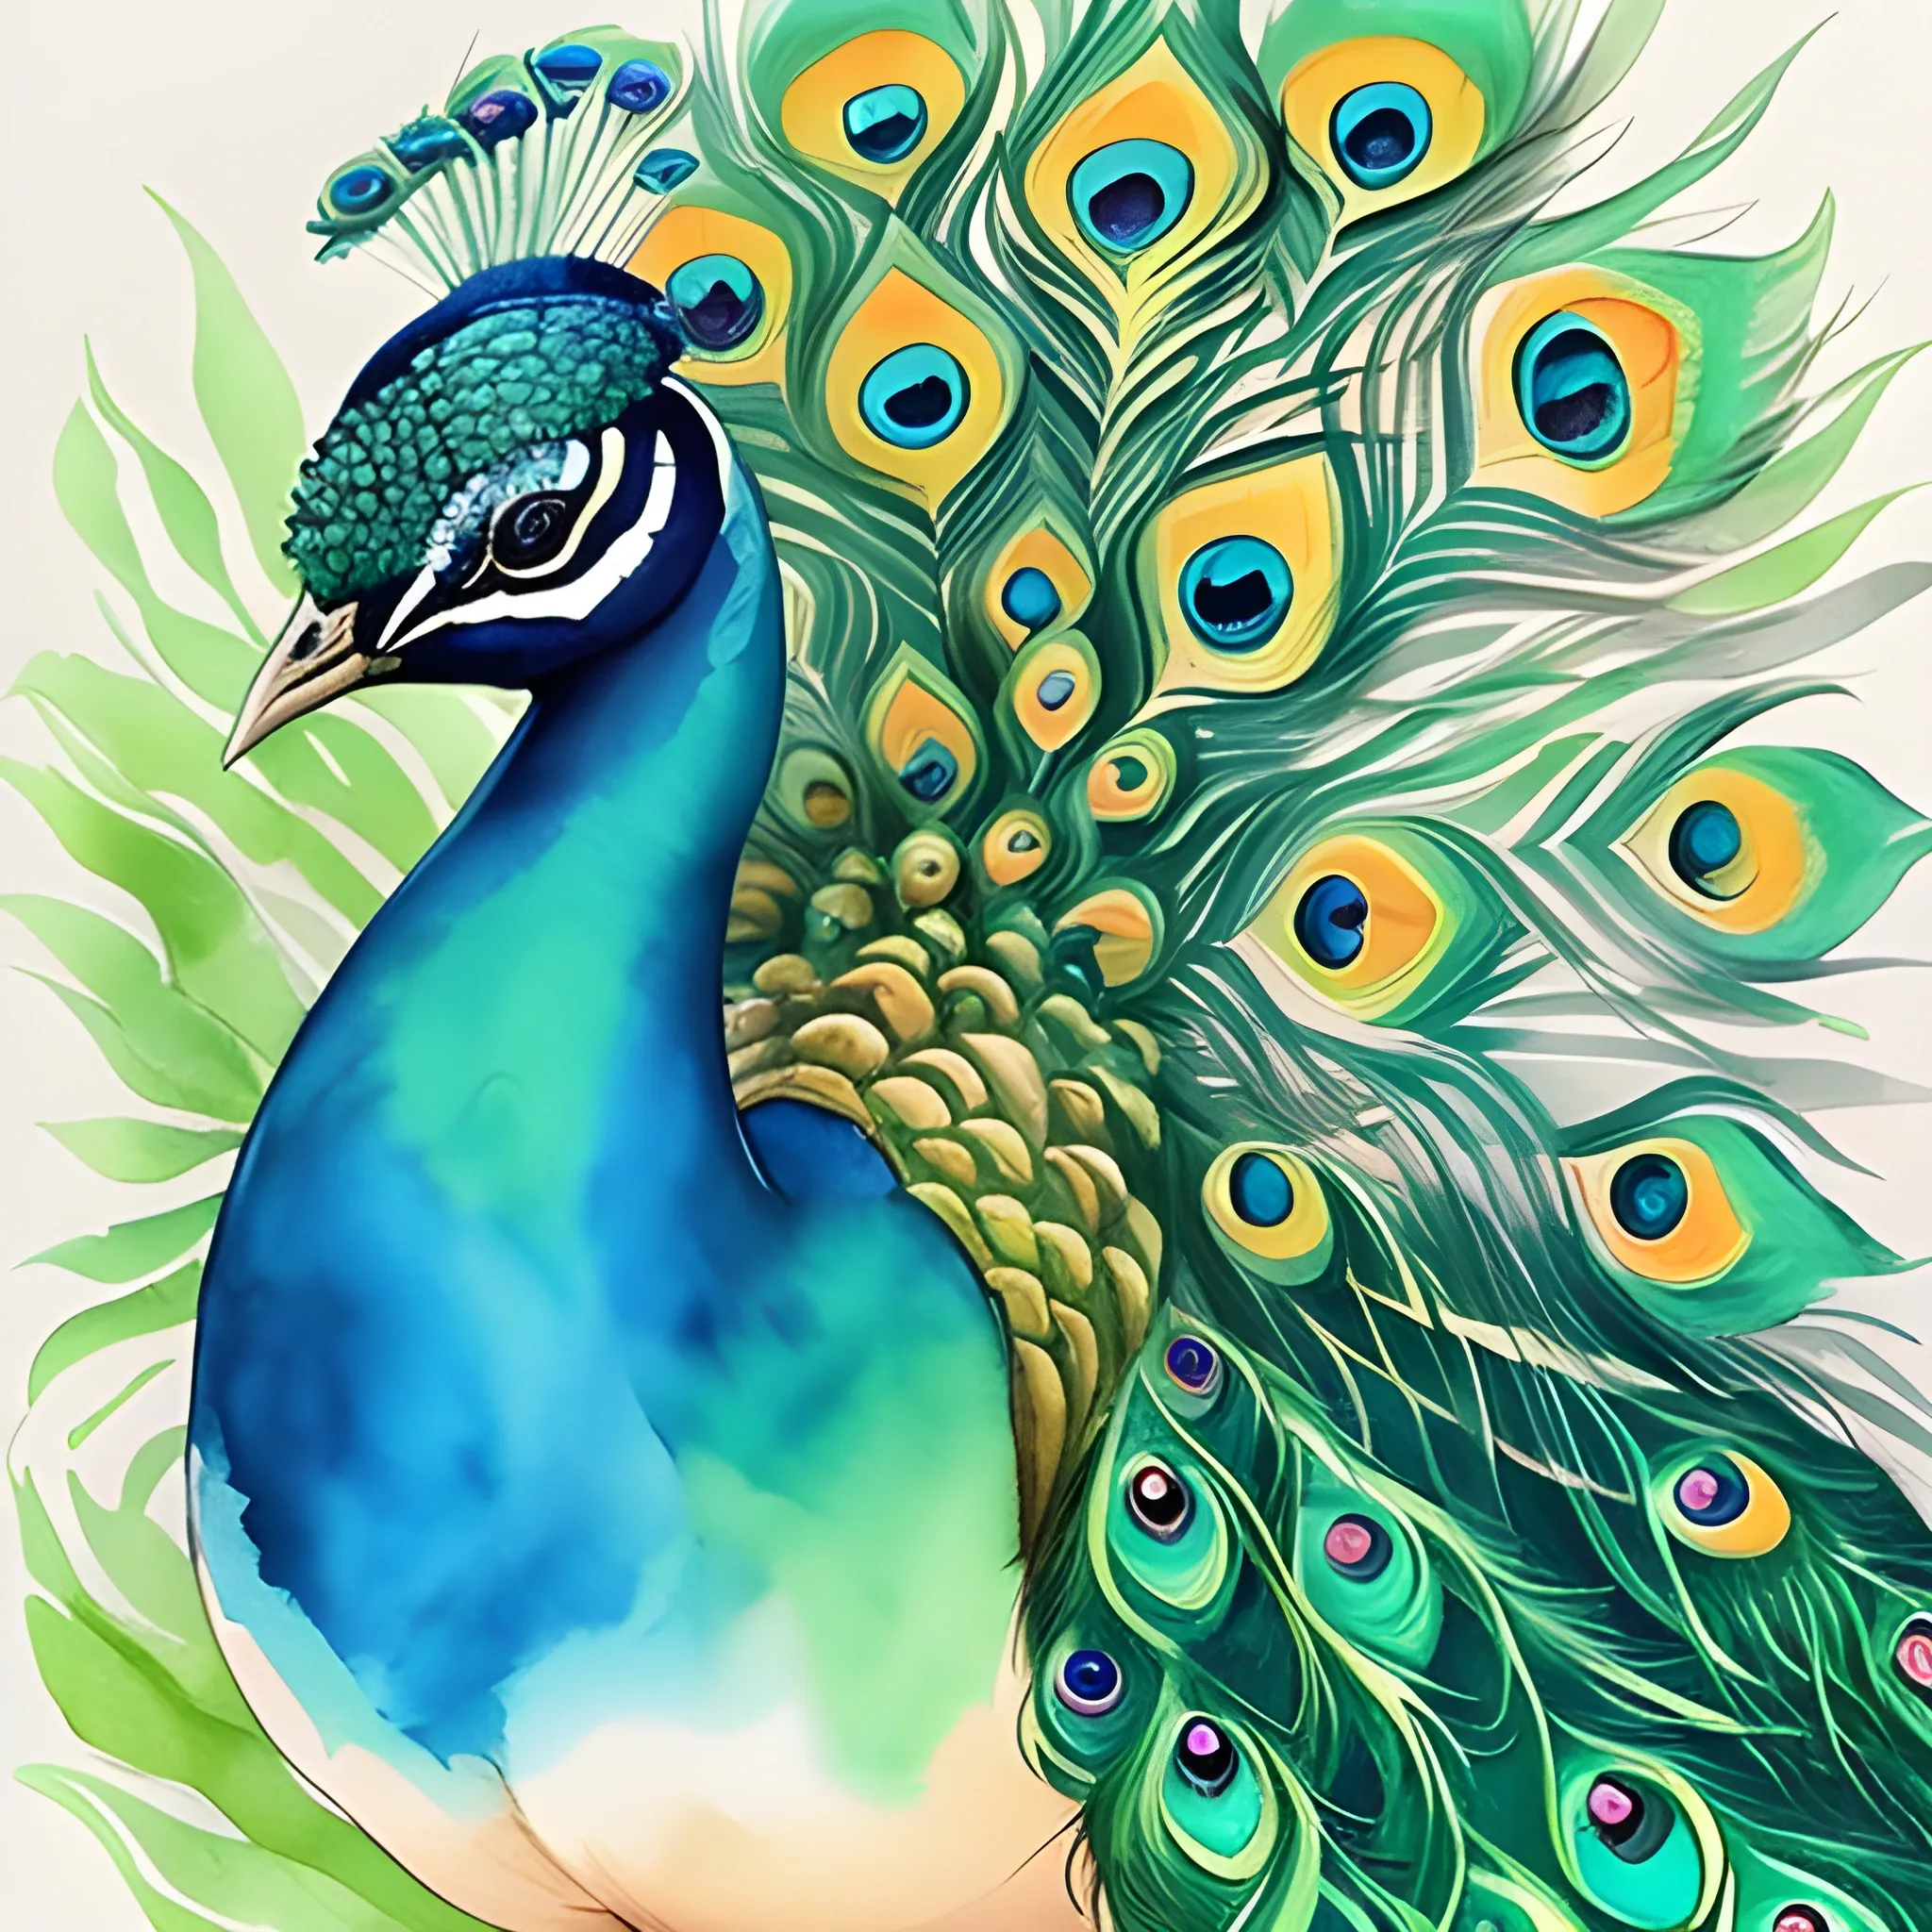 Peacock Illustration Colour Stock Illustration - Download Image Now -  Peacock, Illustration, Victorian Style - iStock